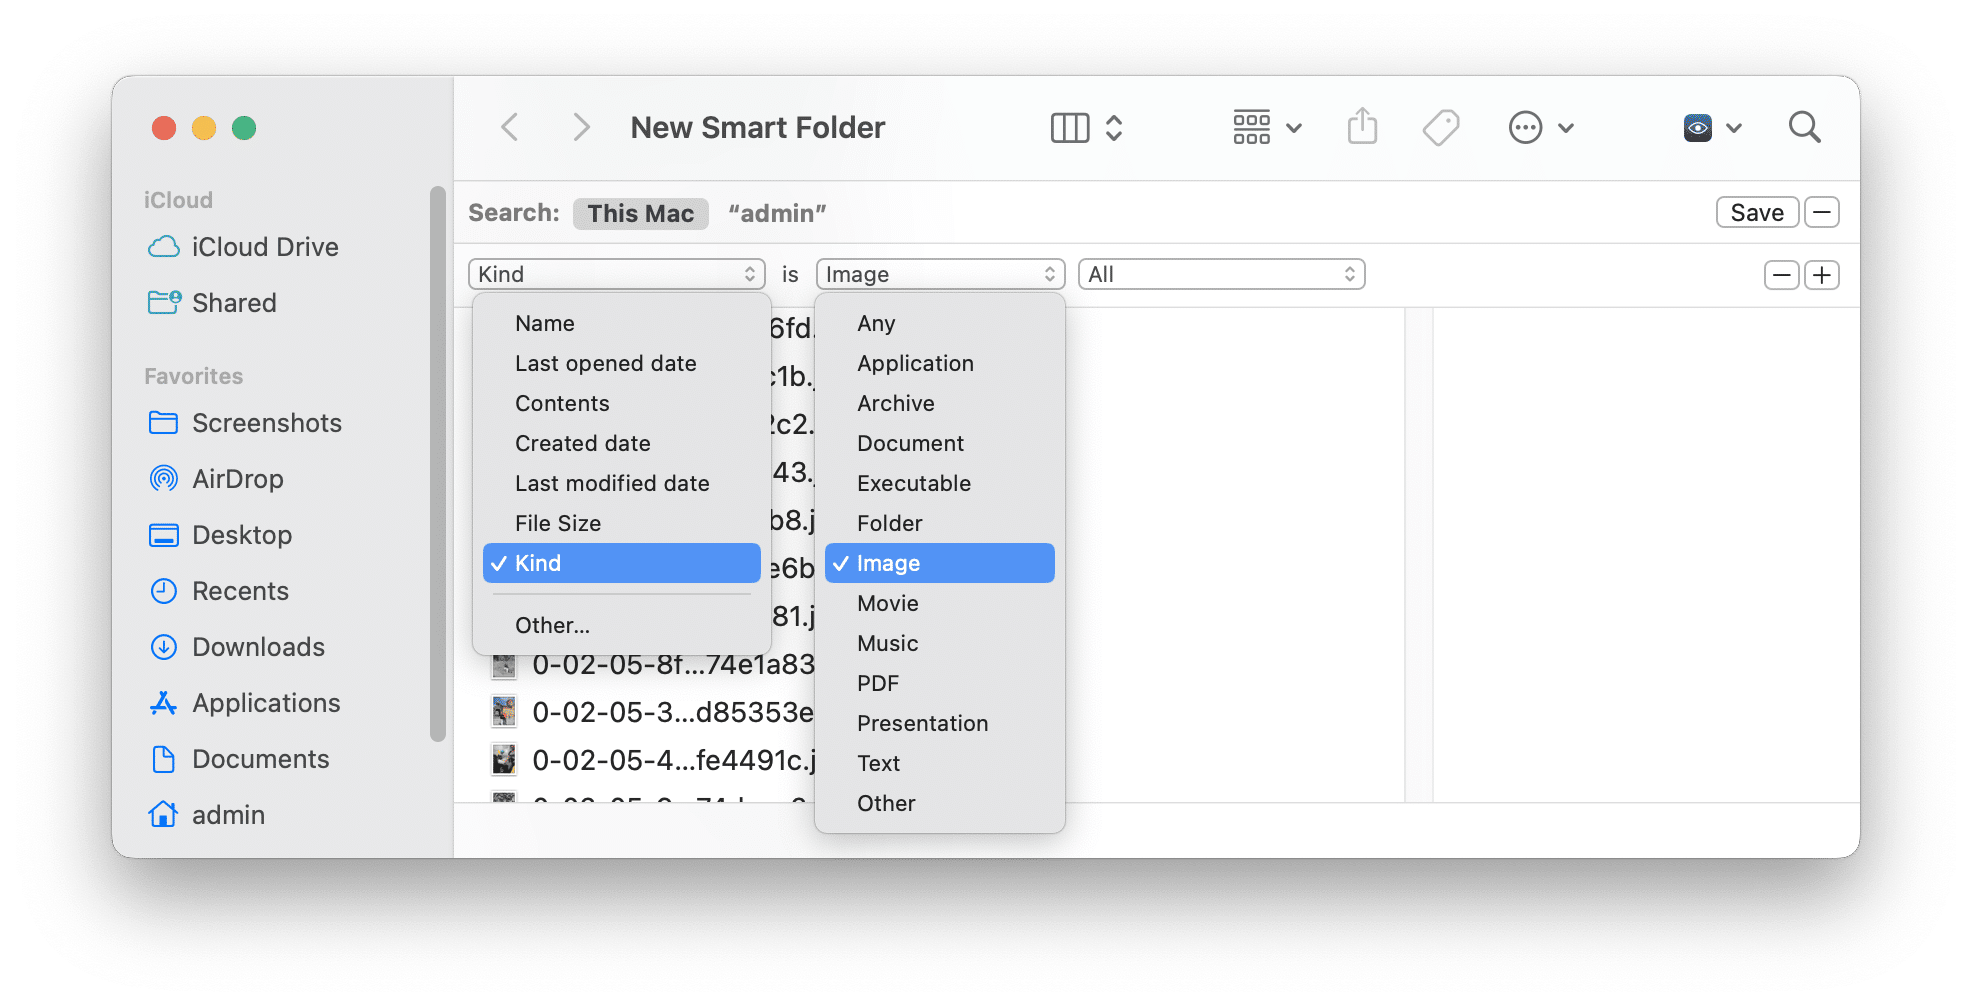 Parameters in Smart Folder